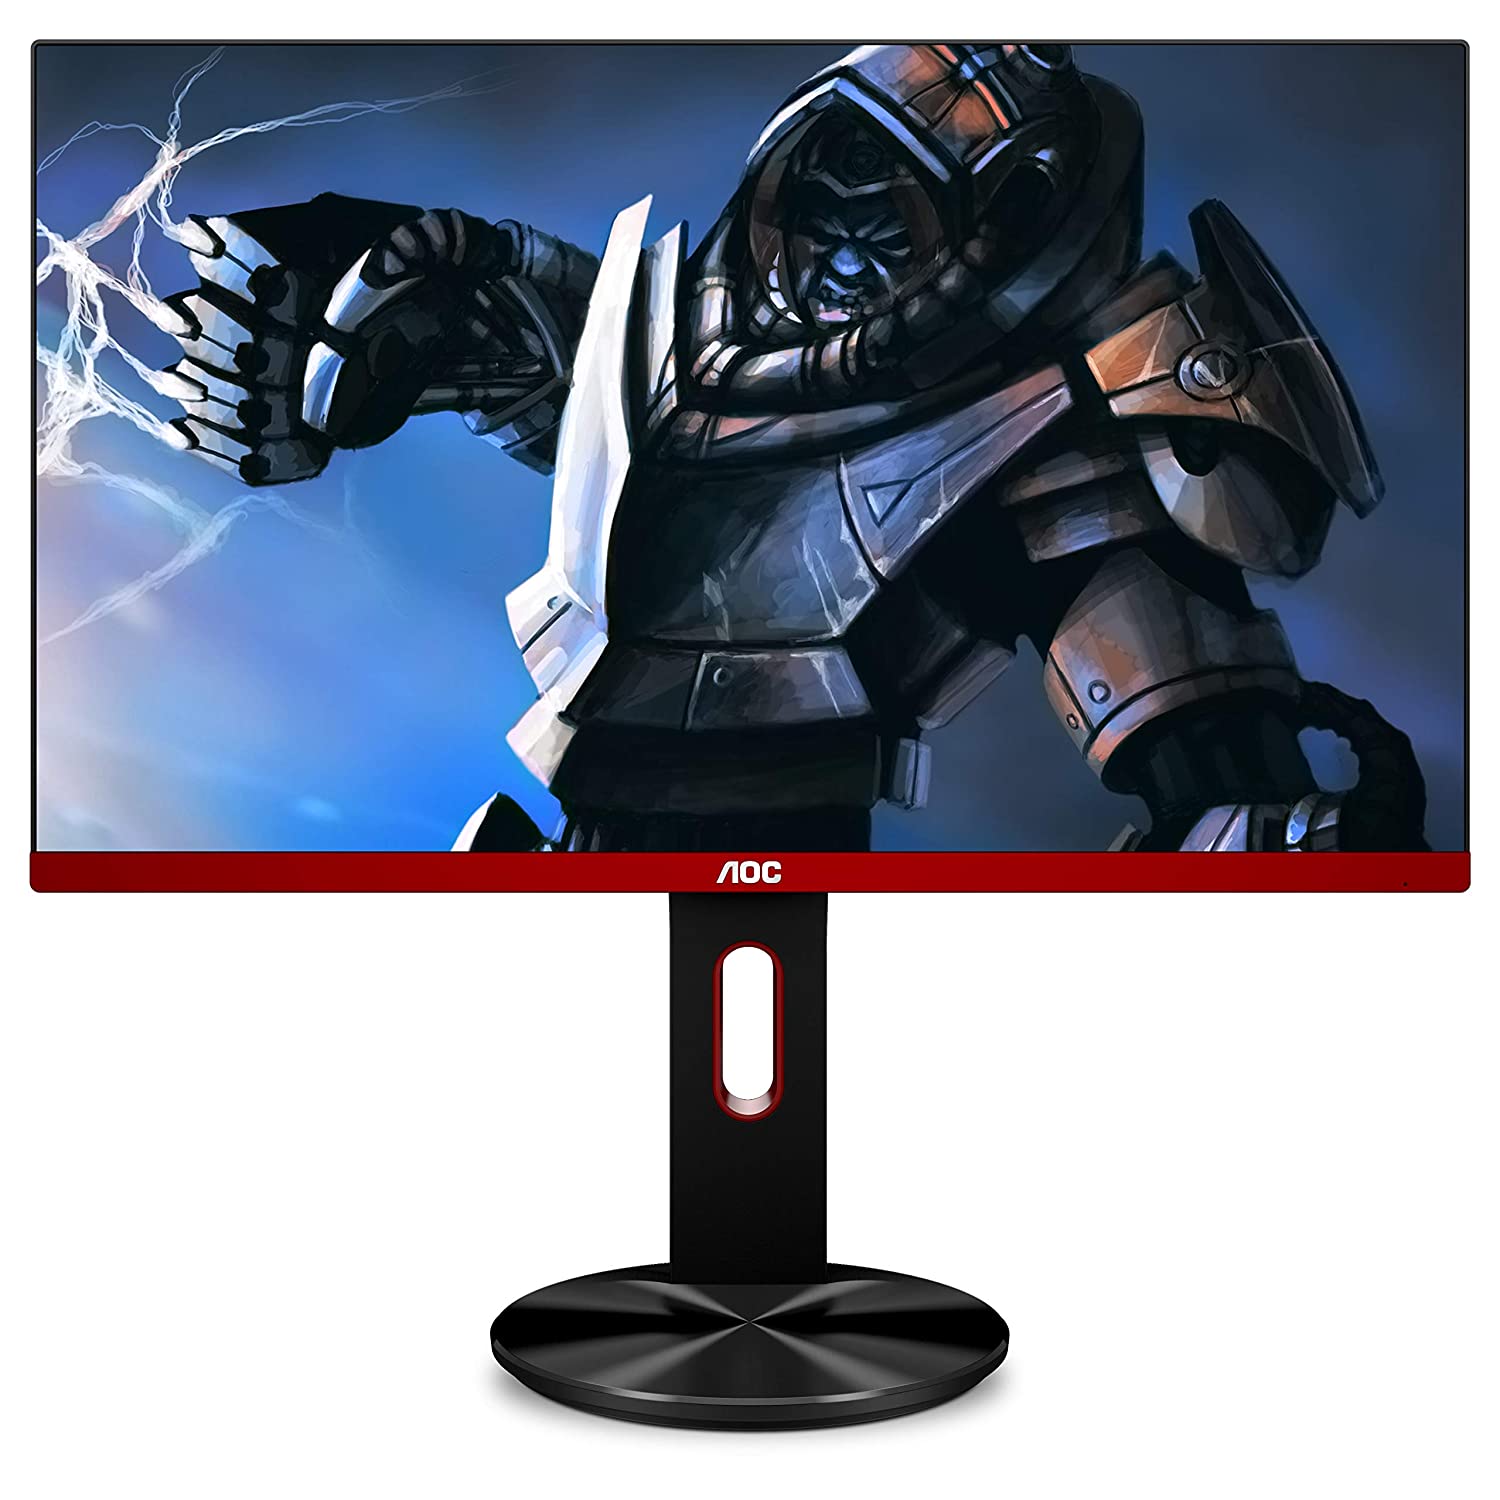 AOC 24.5-inch LED Gaming Monitor - Black (G2590PX)